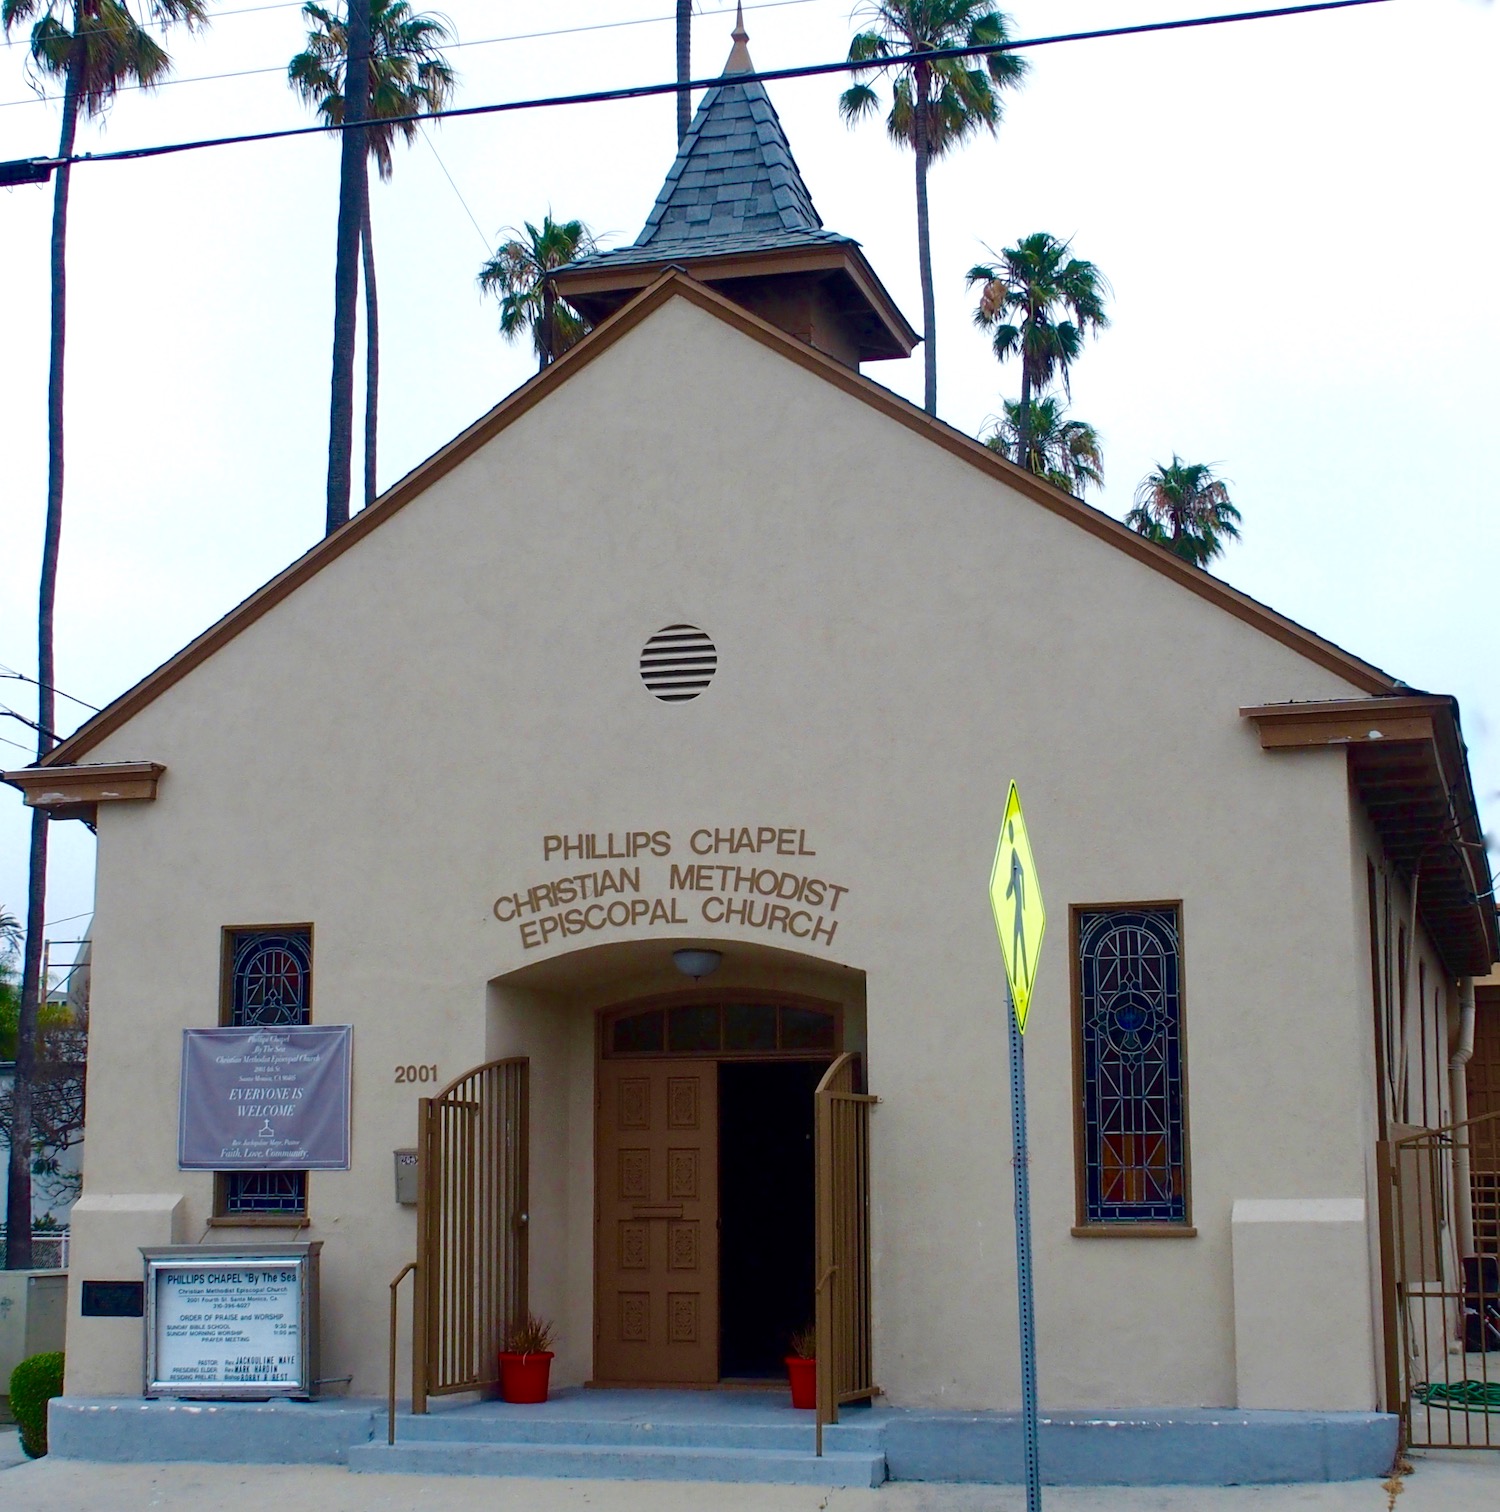 Phillips Chapel Christian Methodist Episcopal (Cme) Church | Santa Monica Conservancy